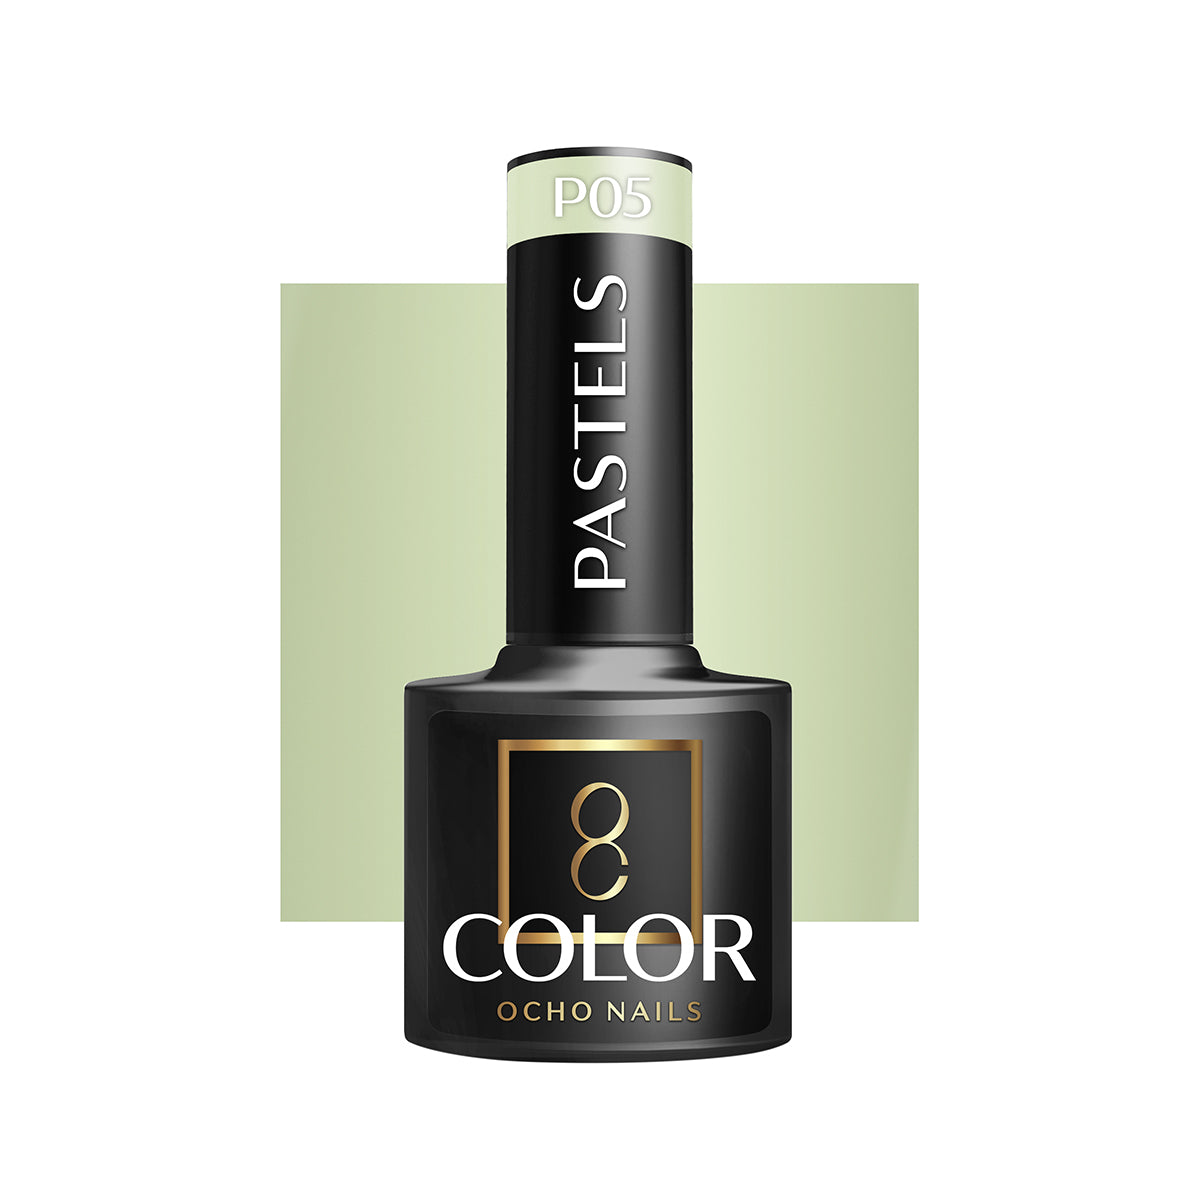 Vernis à ongles hybrides OCHO NAILS pastels P05 -5 g